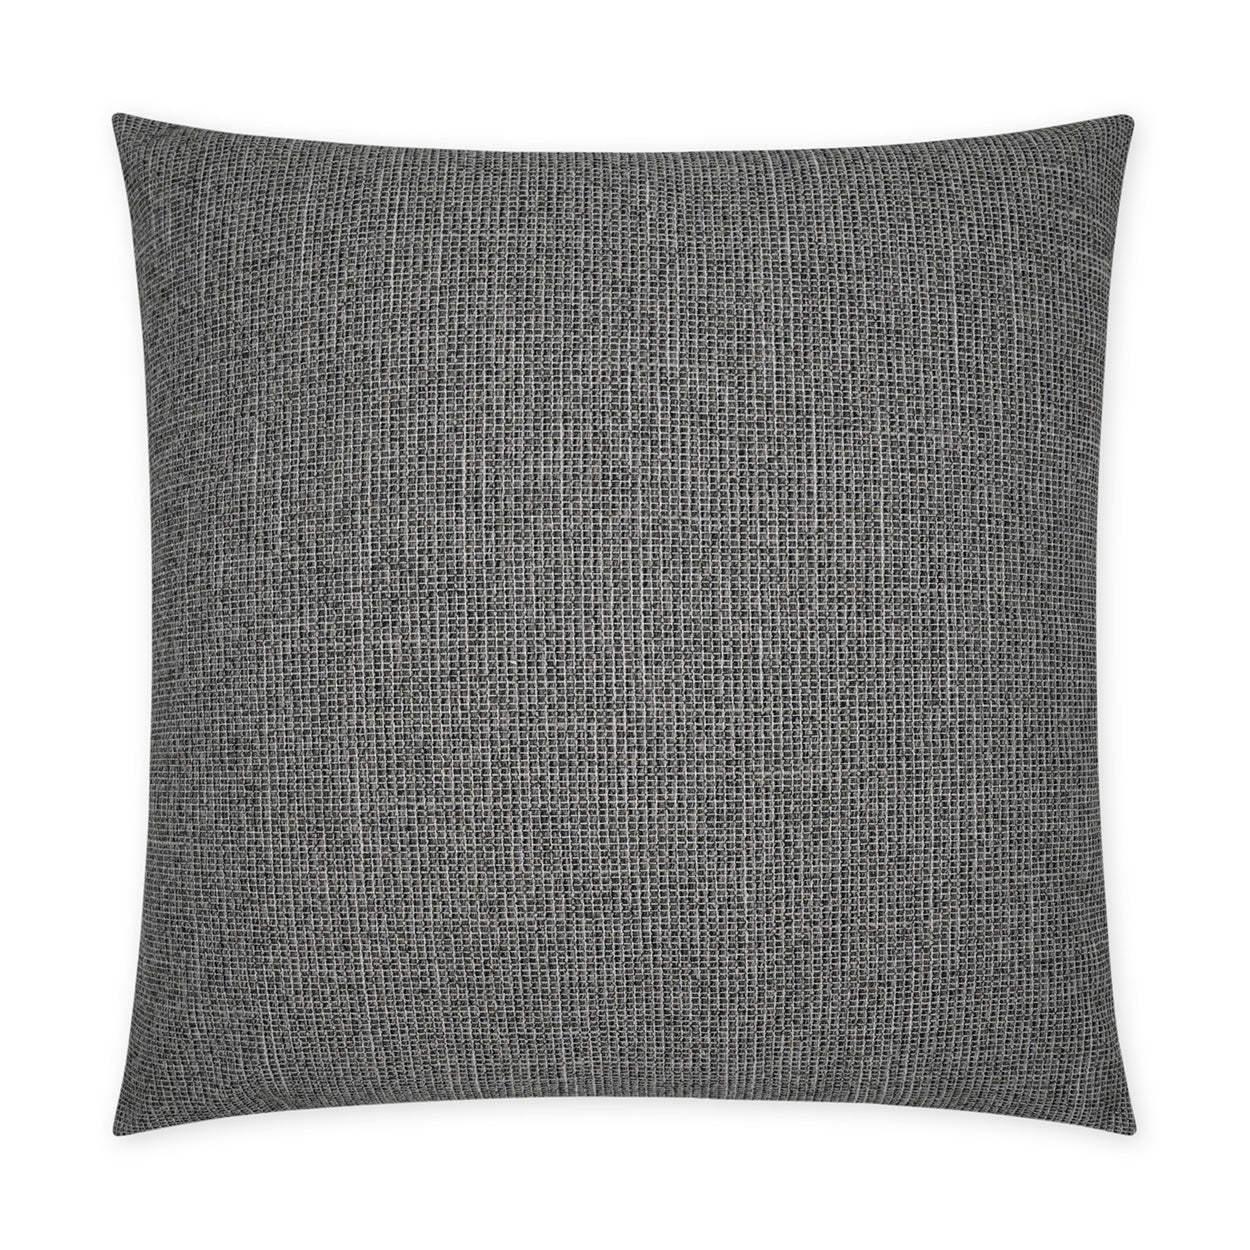 Emmorton Pillow - Charcoal